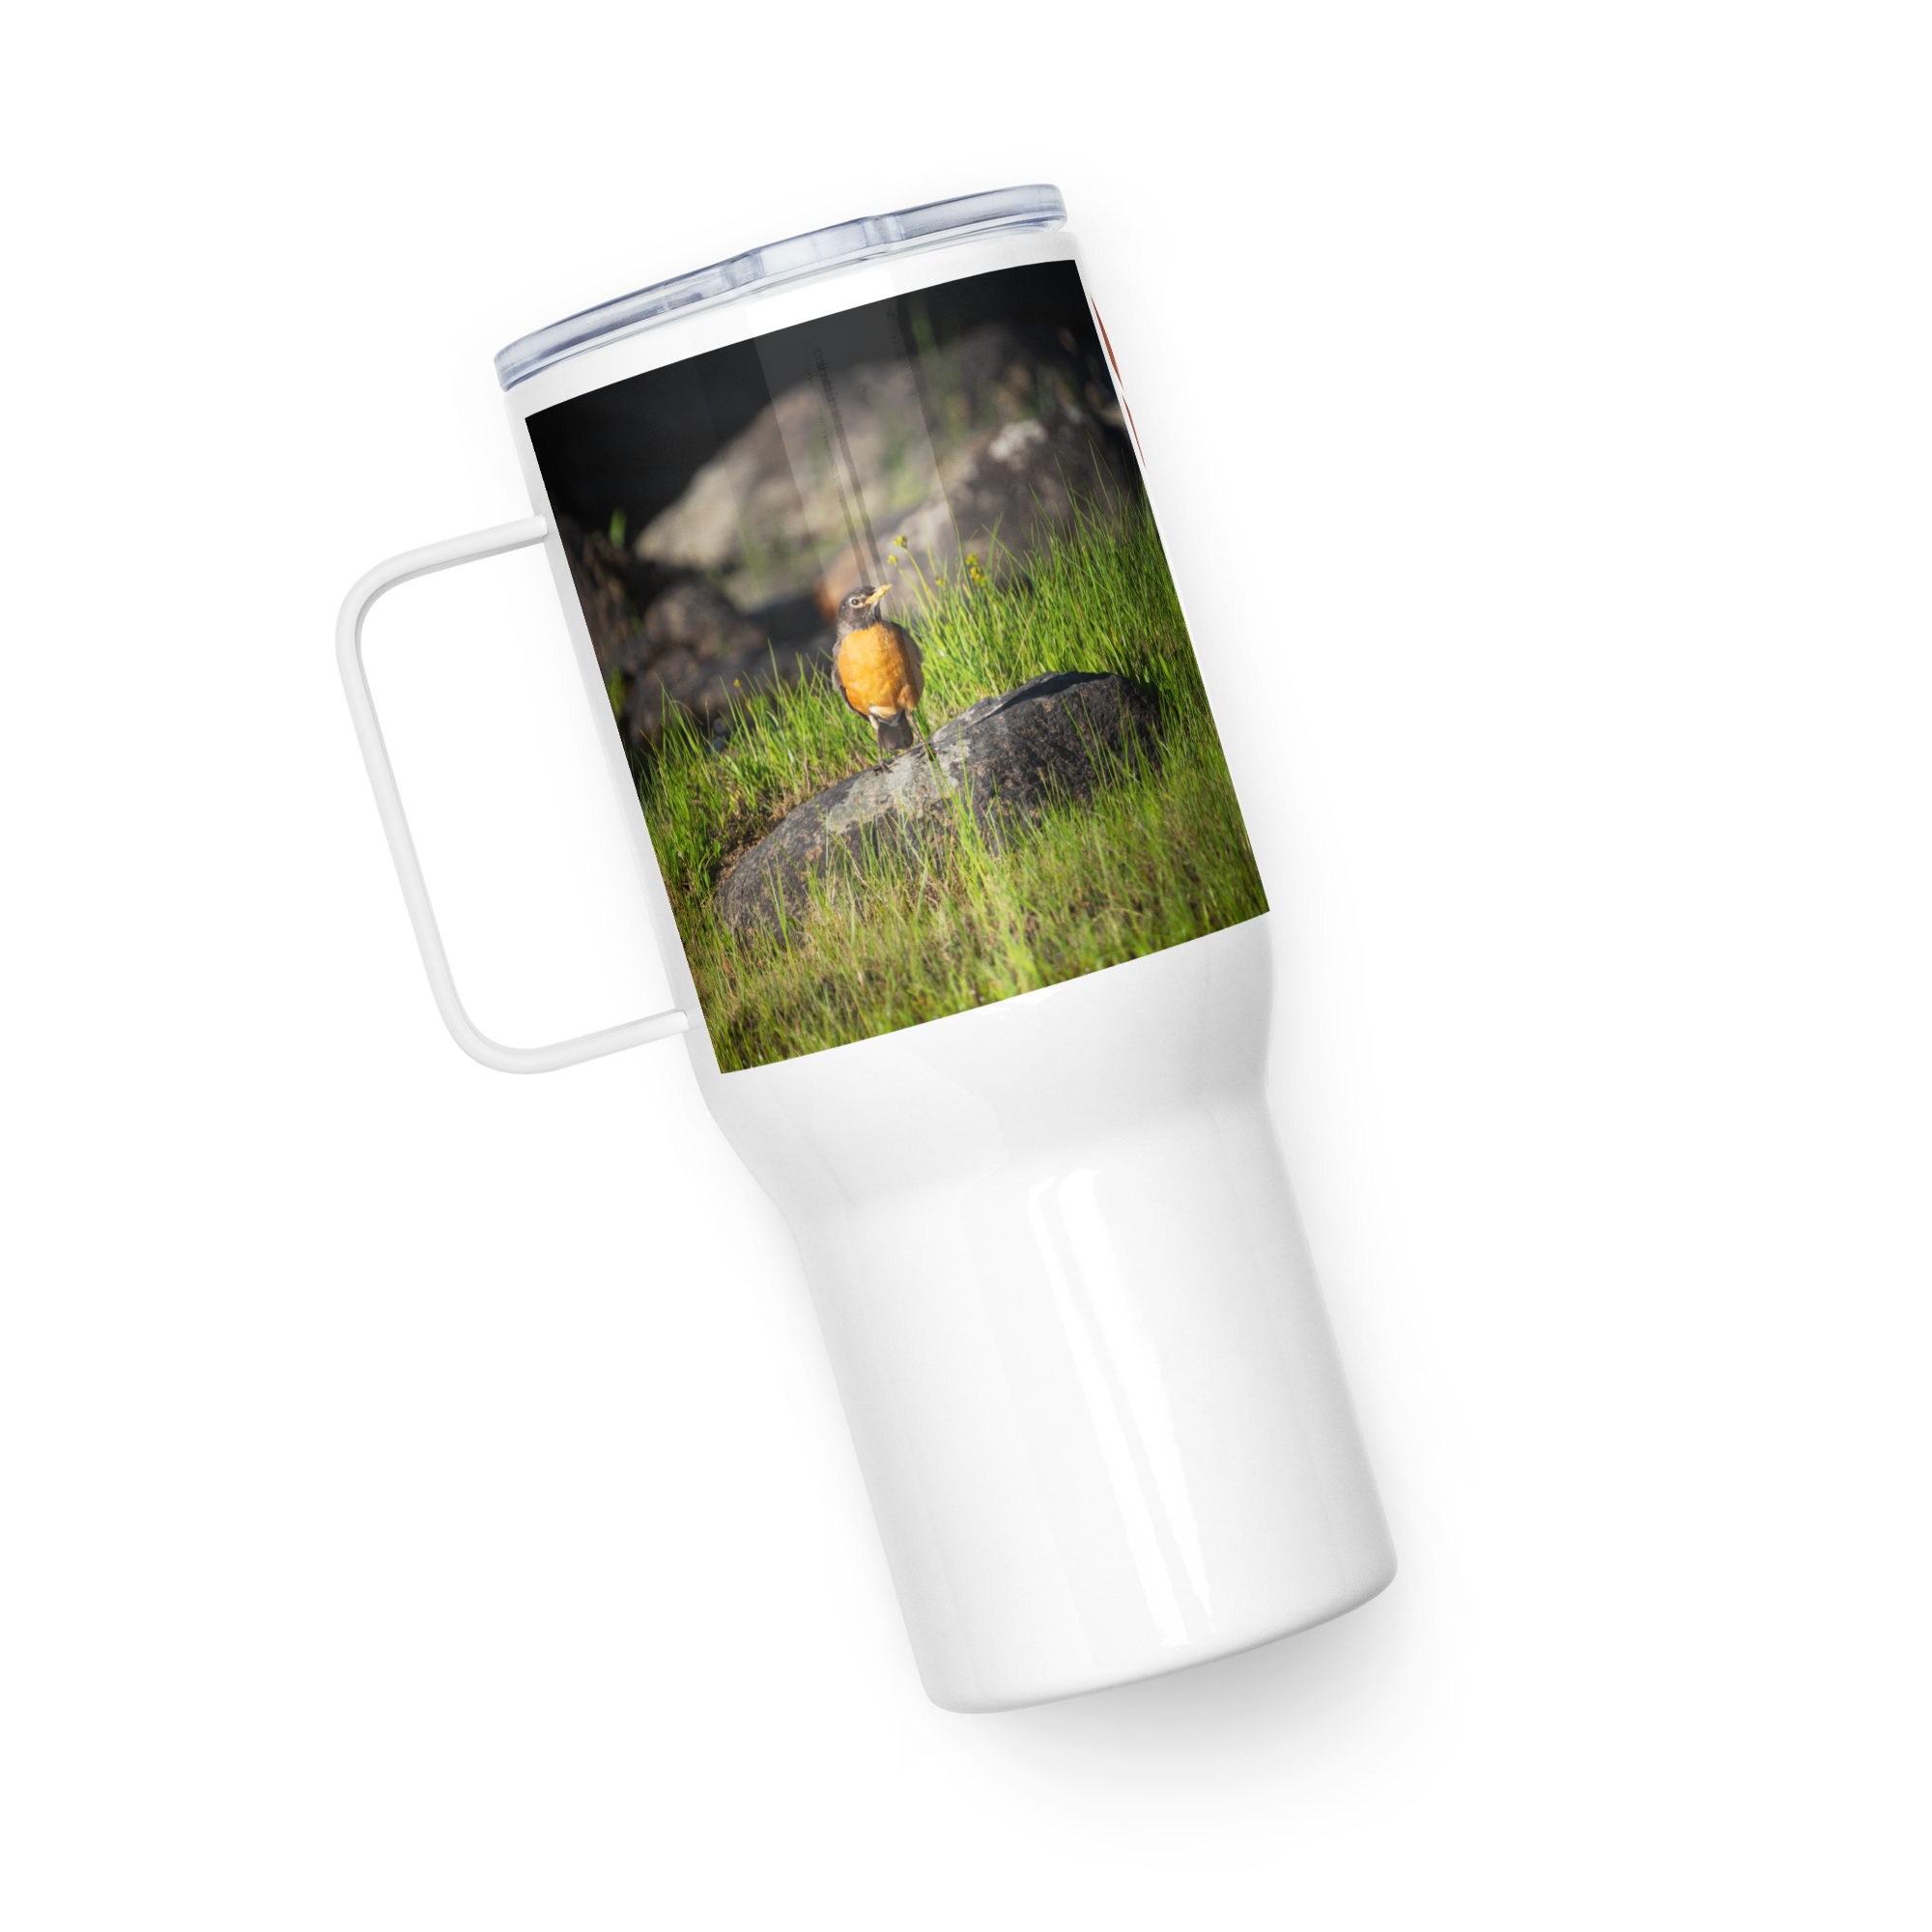 American Robin Travel mug with a handle